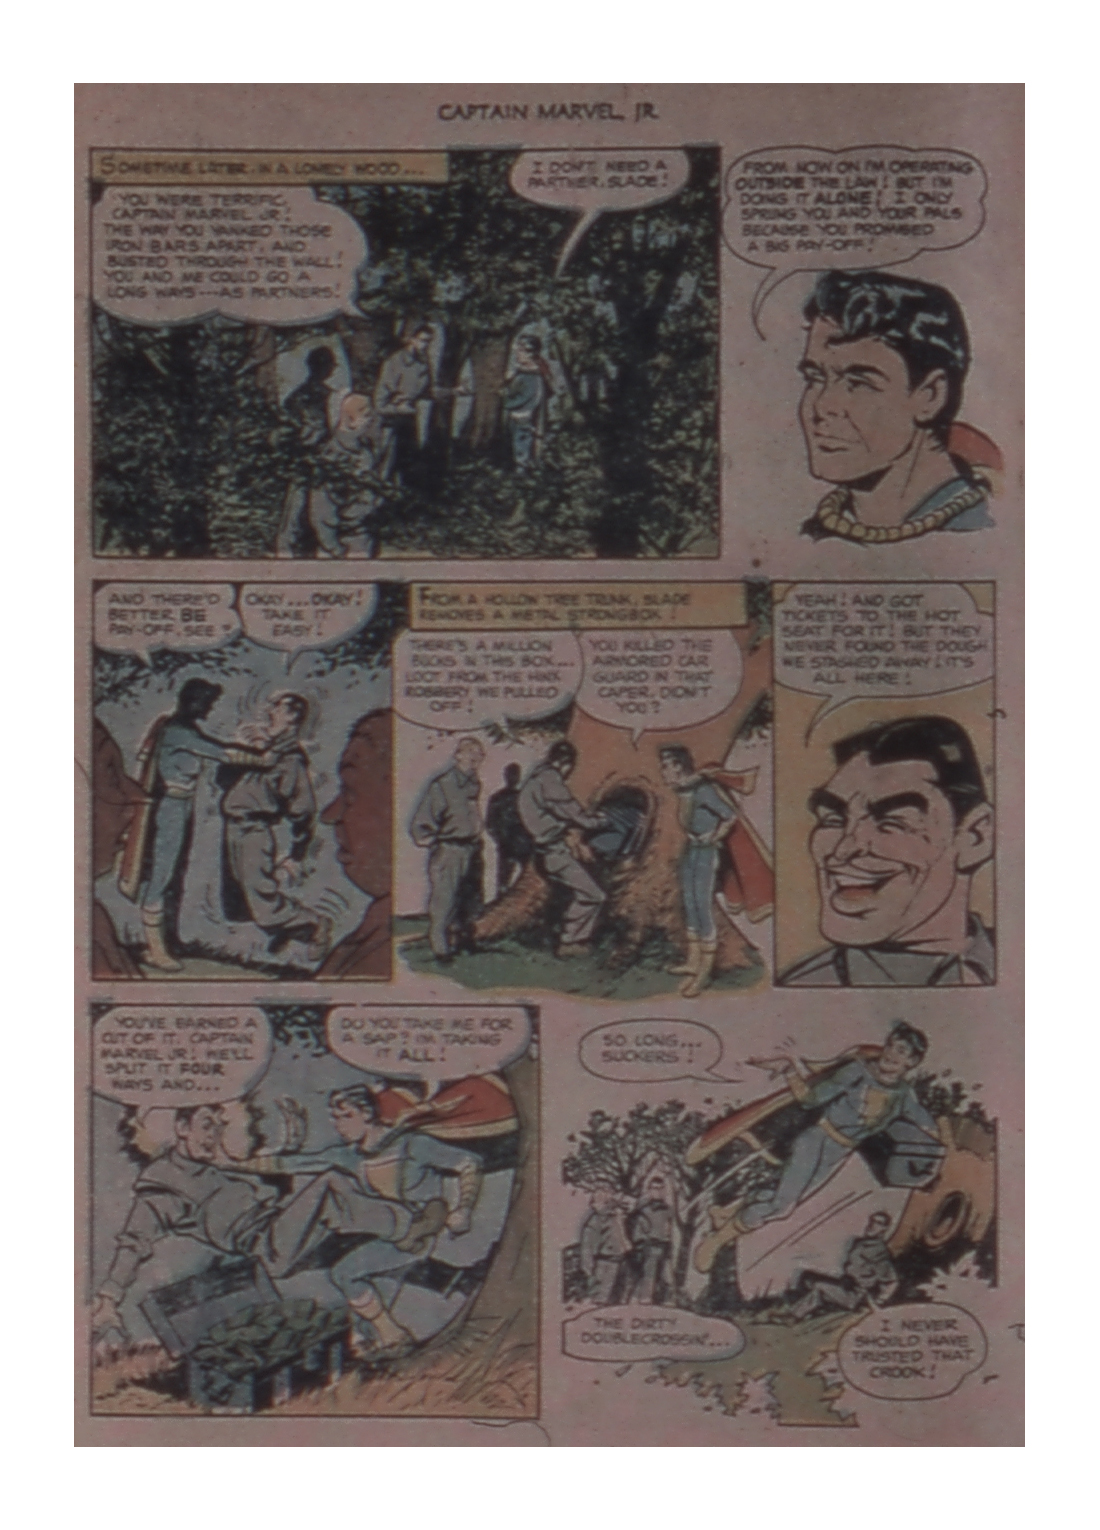 Read online Captain Marvel, Jr. comic -  Issue #119 - 18